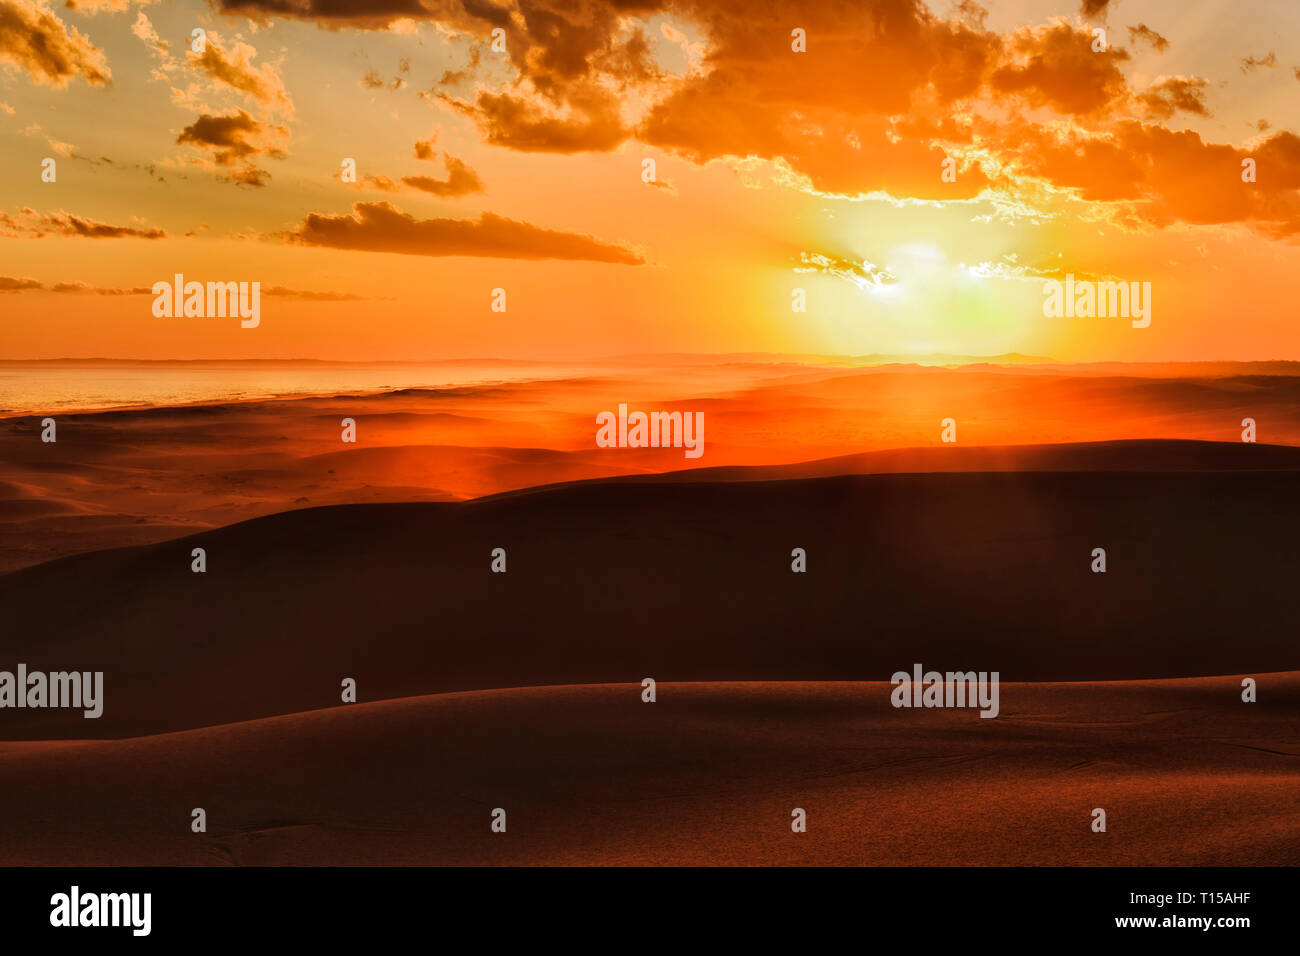 The sun setting over horizon behind long deserted sand dunes of Stockton beach on Pacific coast of Australia - bright orange sunlight hues sands and s Stock Photo